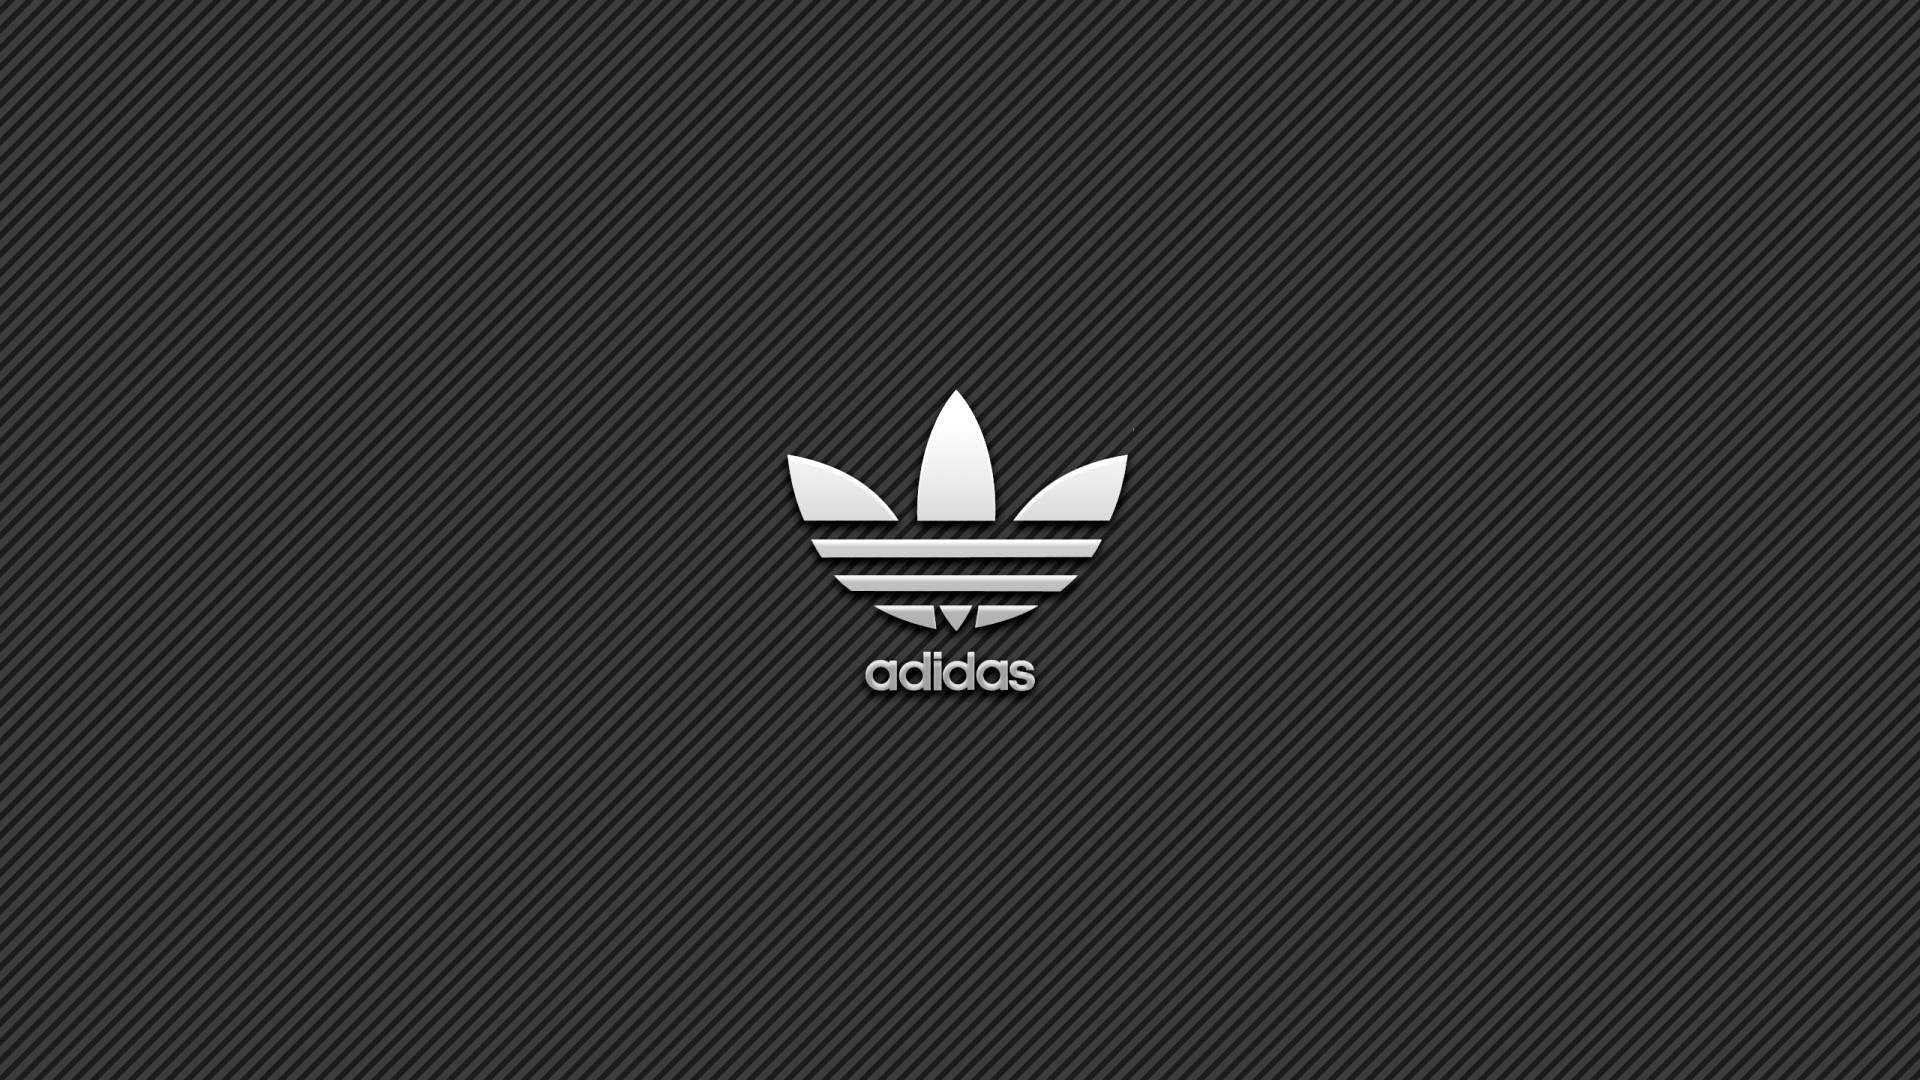 Free Adidas Soccer Wallpaper 1080p